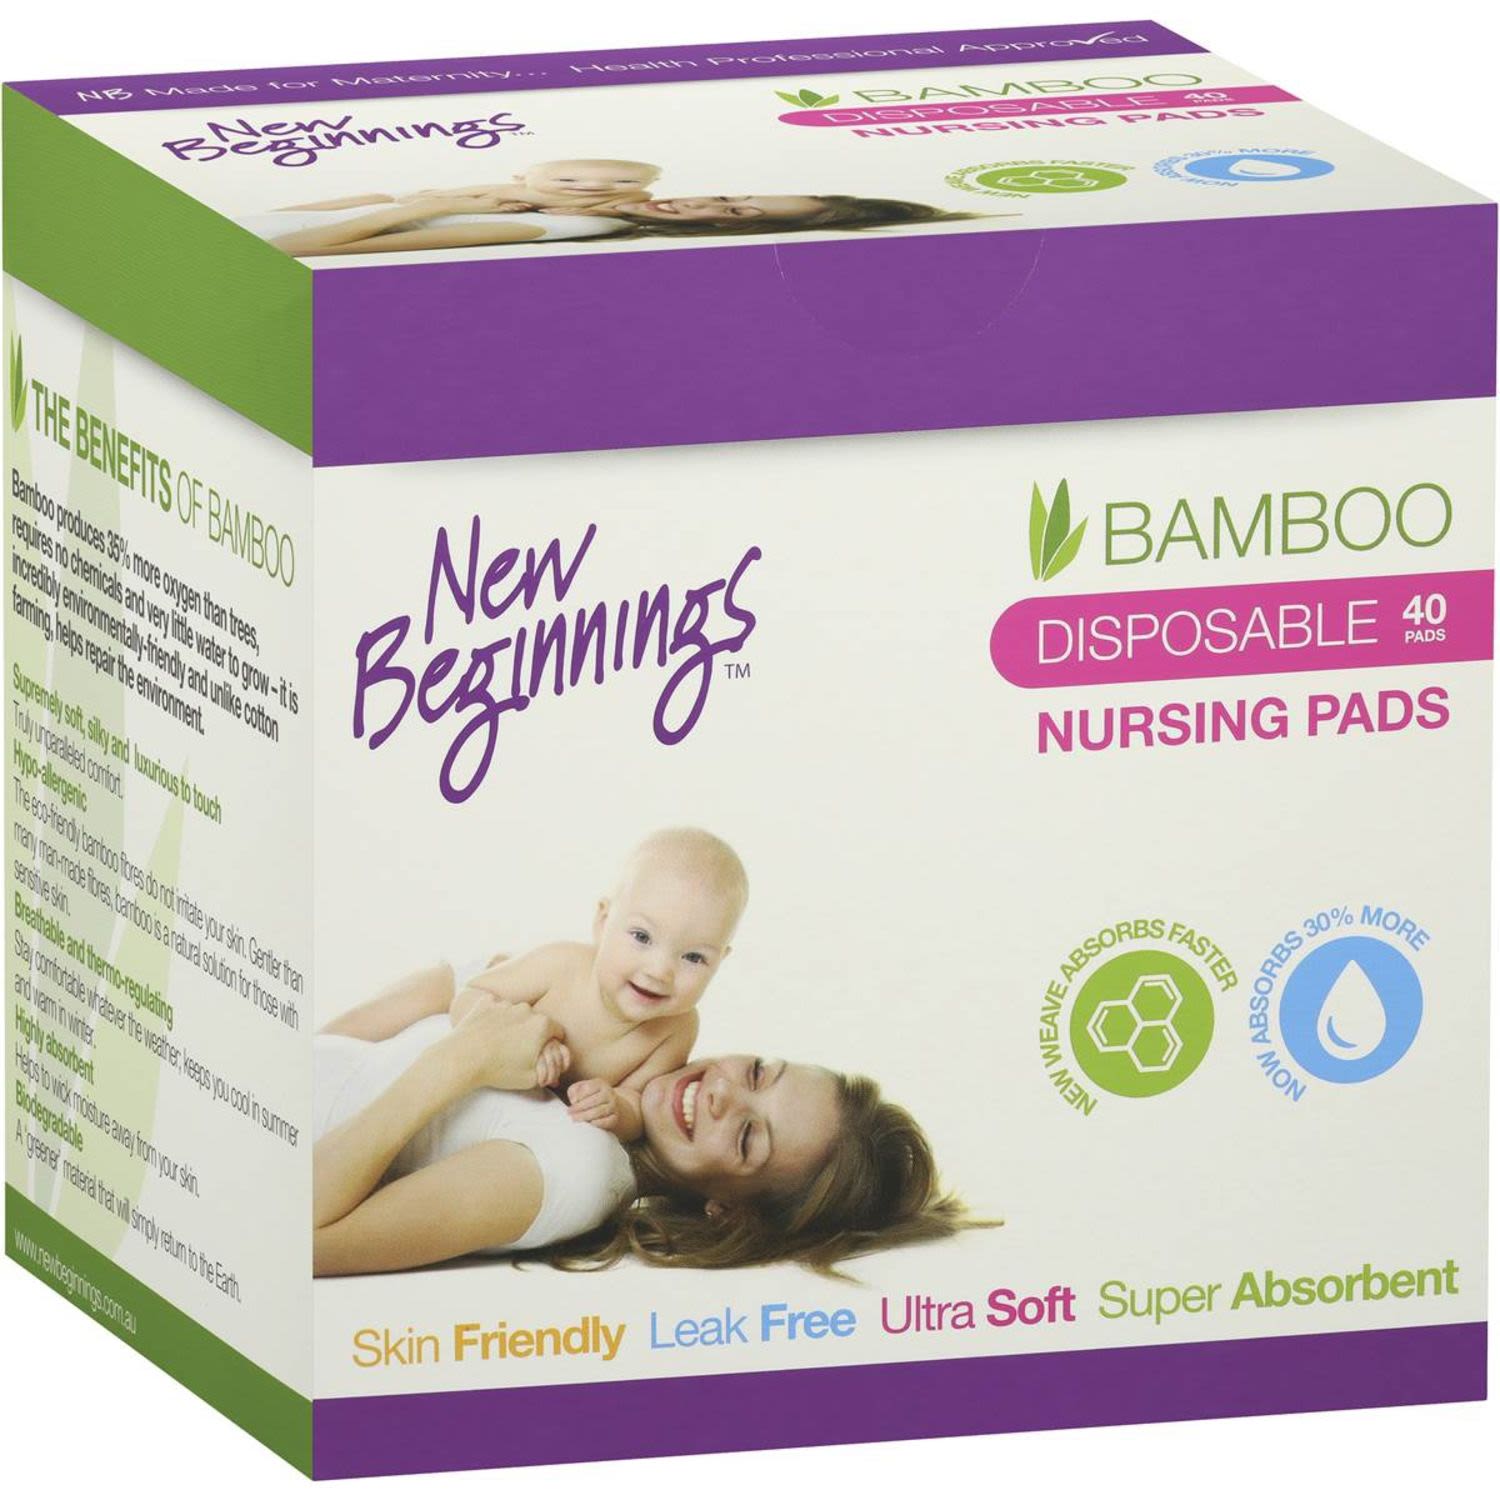 New Beginnings Bamboo Disposable Nursing Pads, 40 Each